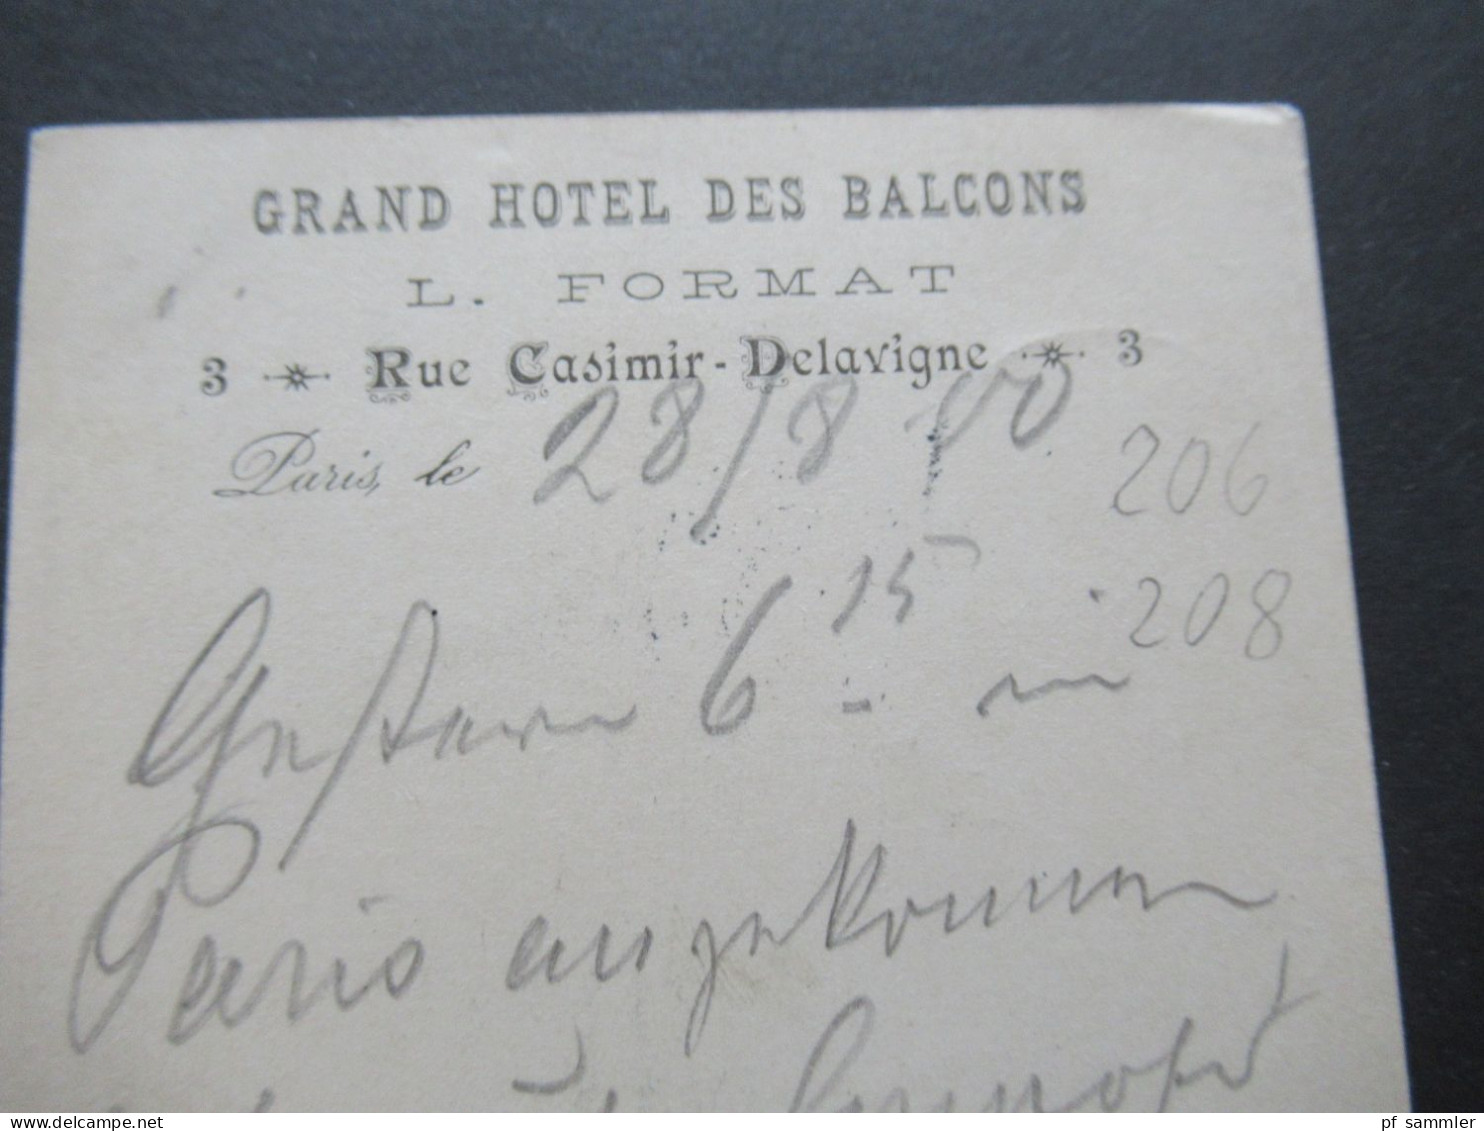 AK Frankreich Weltausstellung Exposition de 1900 pigeonnier Japon mit Druck Grand Hotel des Balcons L. Format Paris